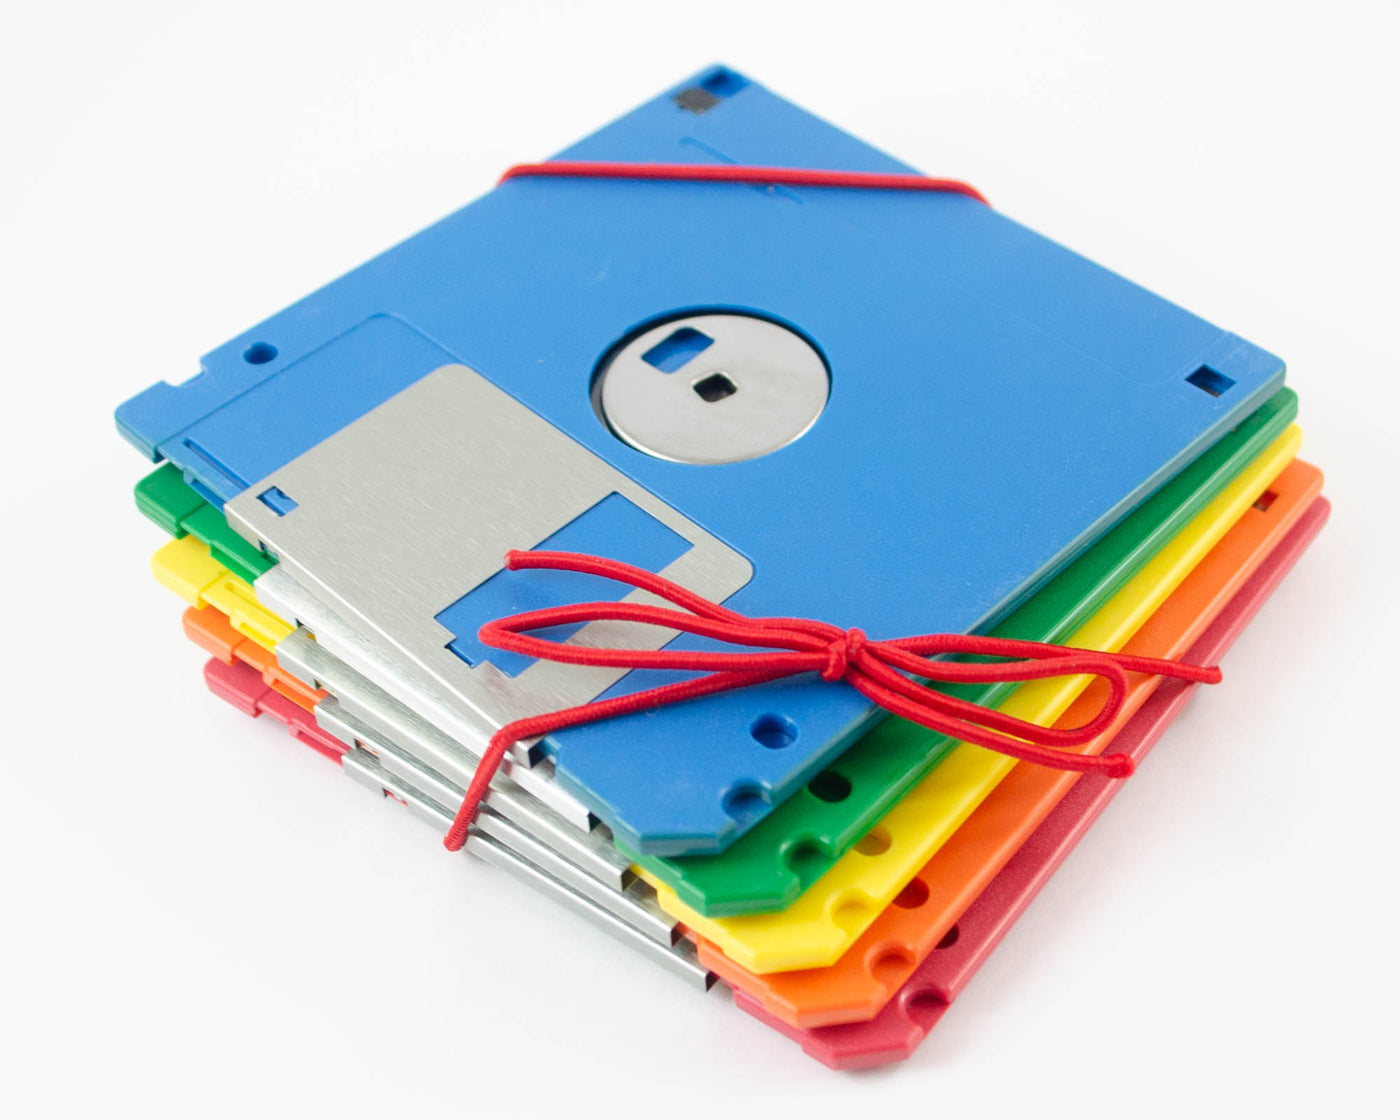 Rainbow Floppy Disc Coasters - Set of 5